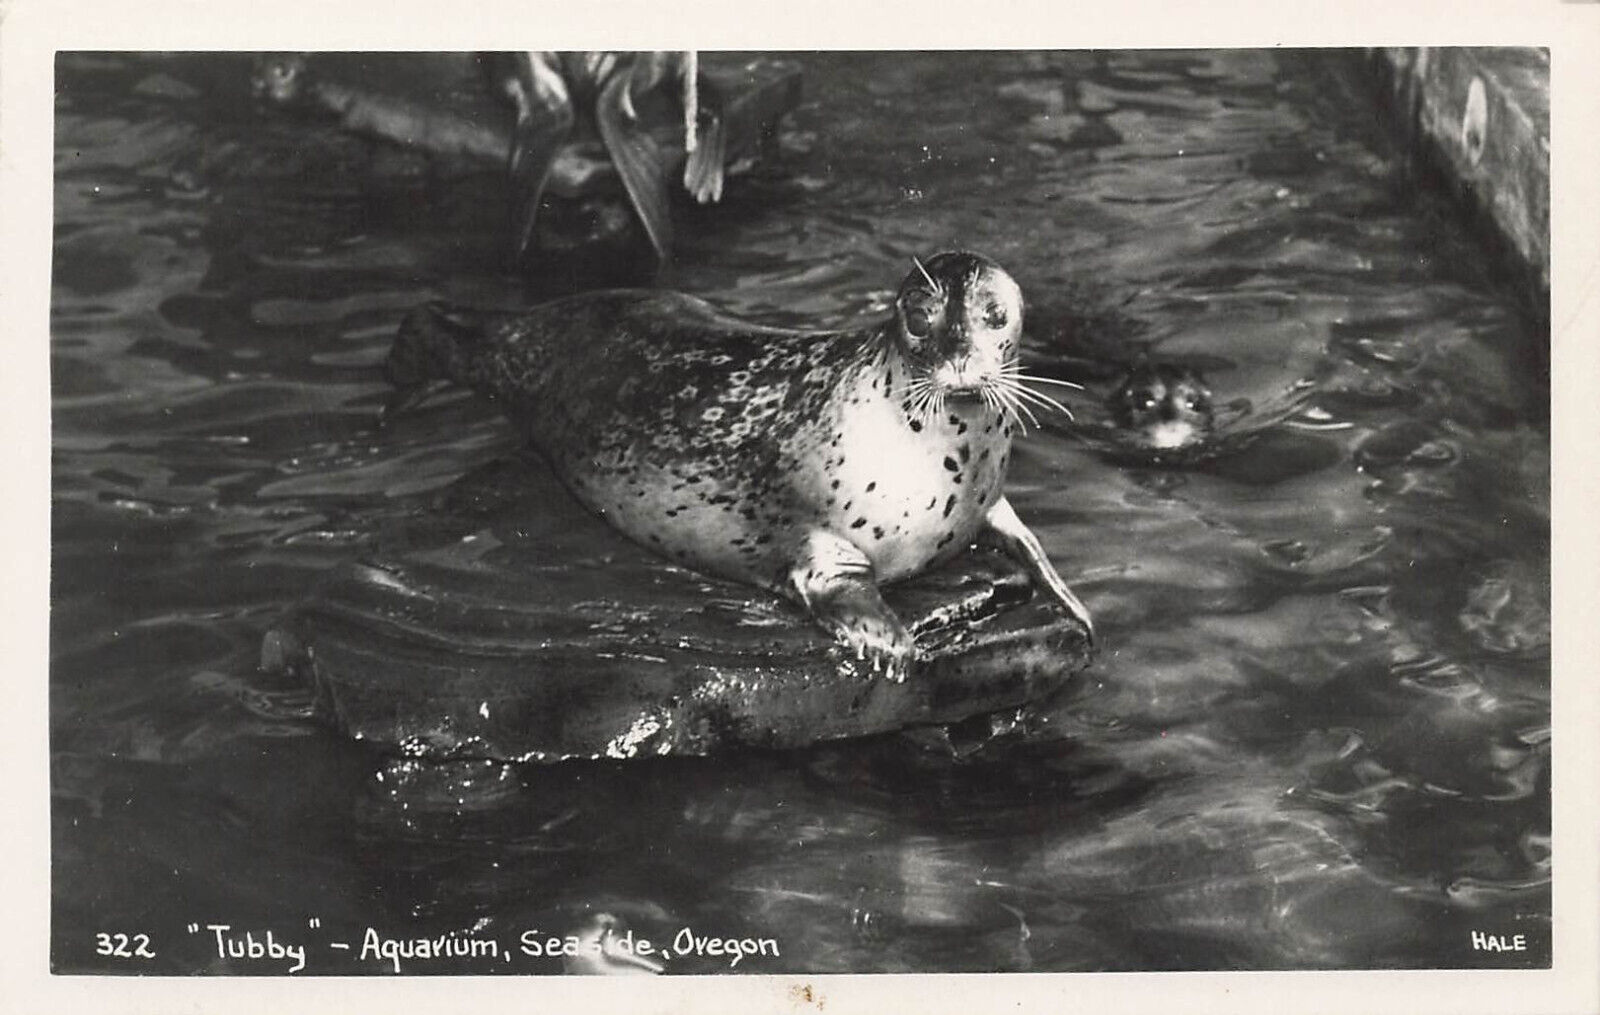 TUBBY THE SEAL AT AQUARIUM REAL PHOTO POSTCARD SEASIDE OR OREGON 1940s RPPC